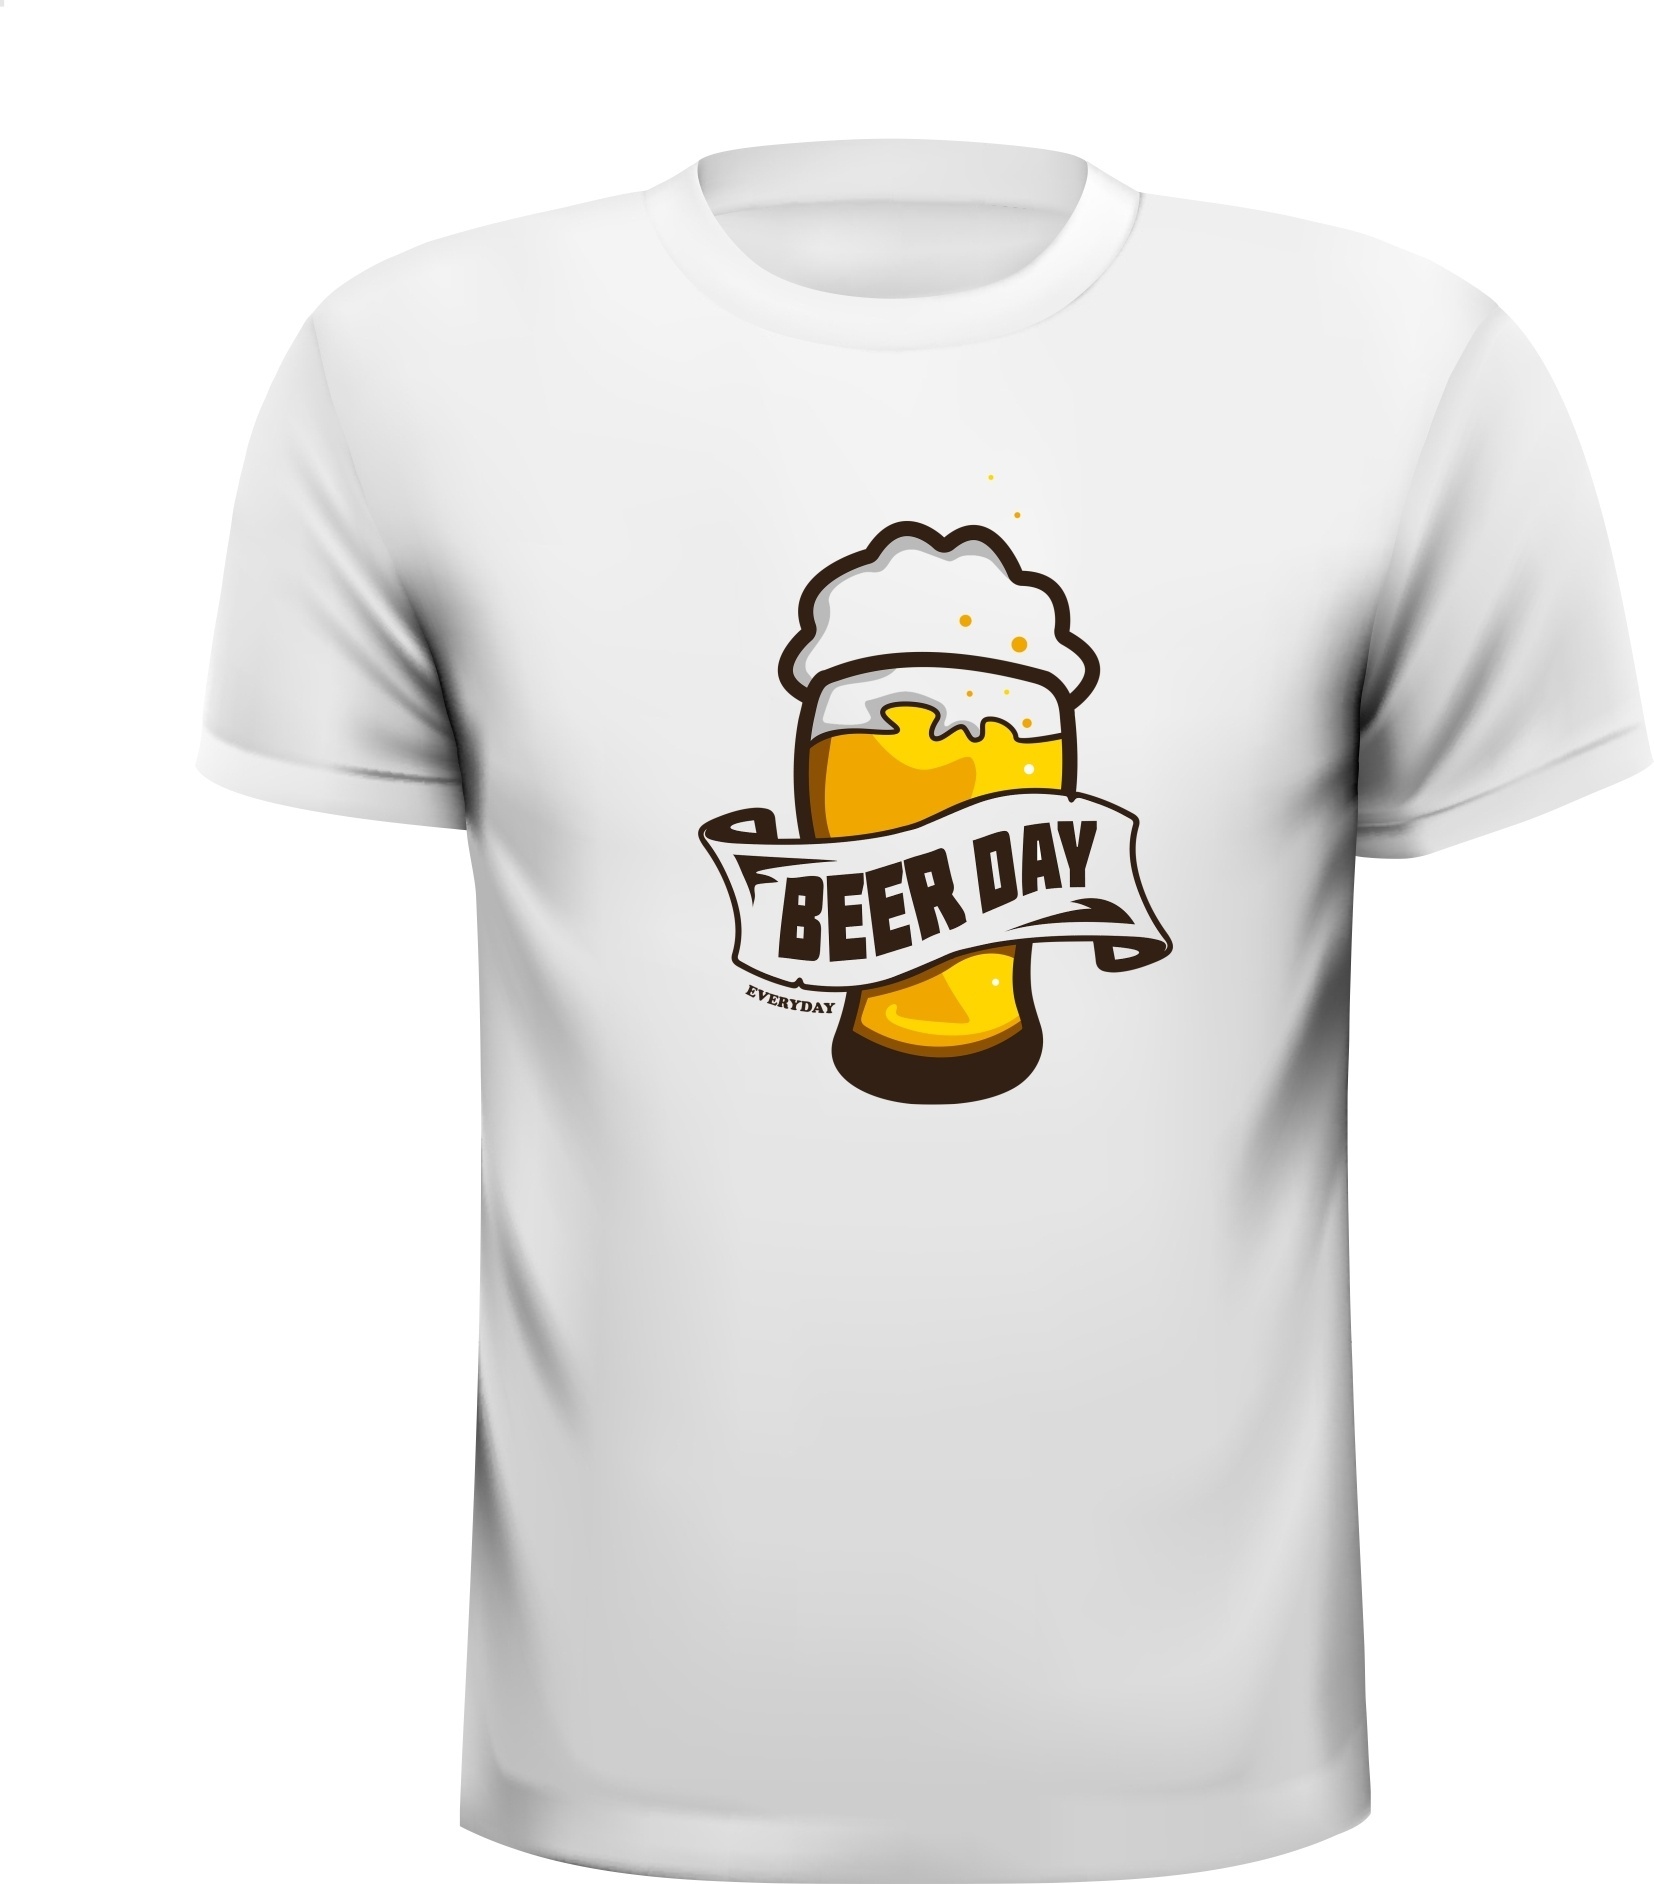 Beer day everyday bier elke dag T-shirt